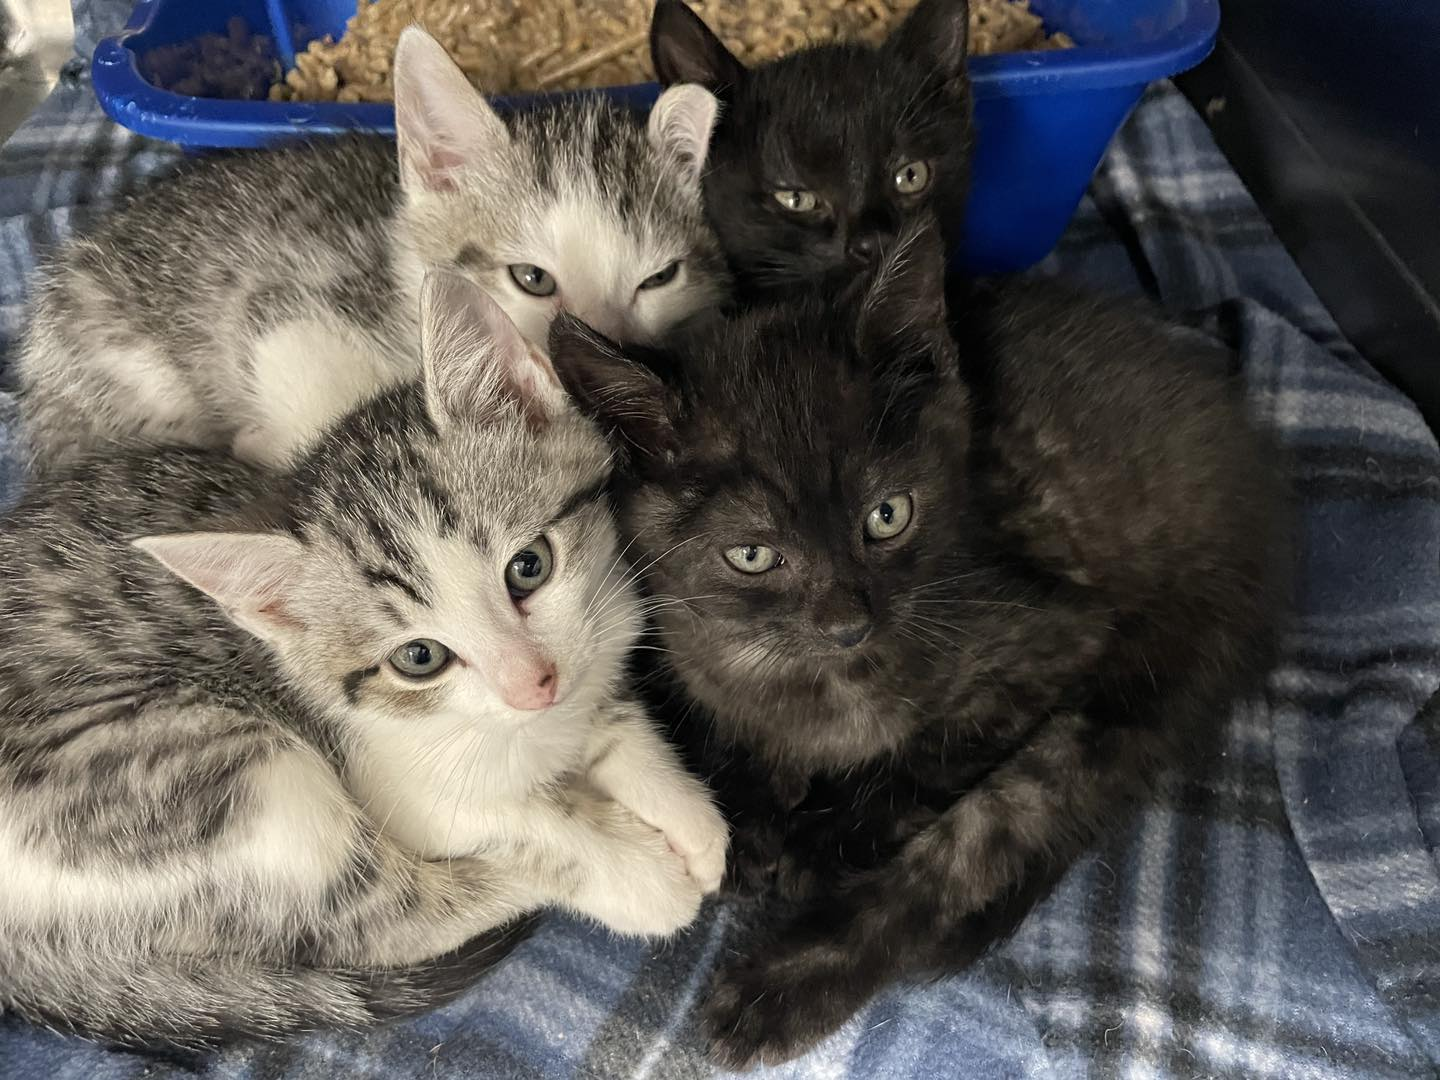 It’s a ‘cat’-astrophe! Feline population at Huntsville shelter hits peak